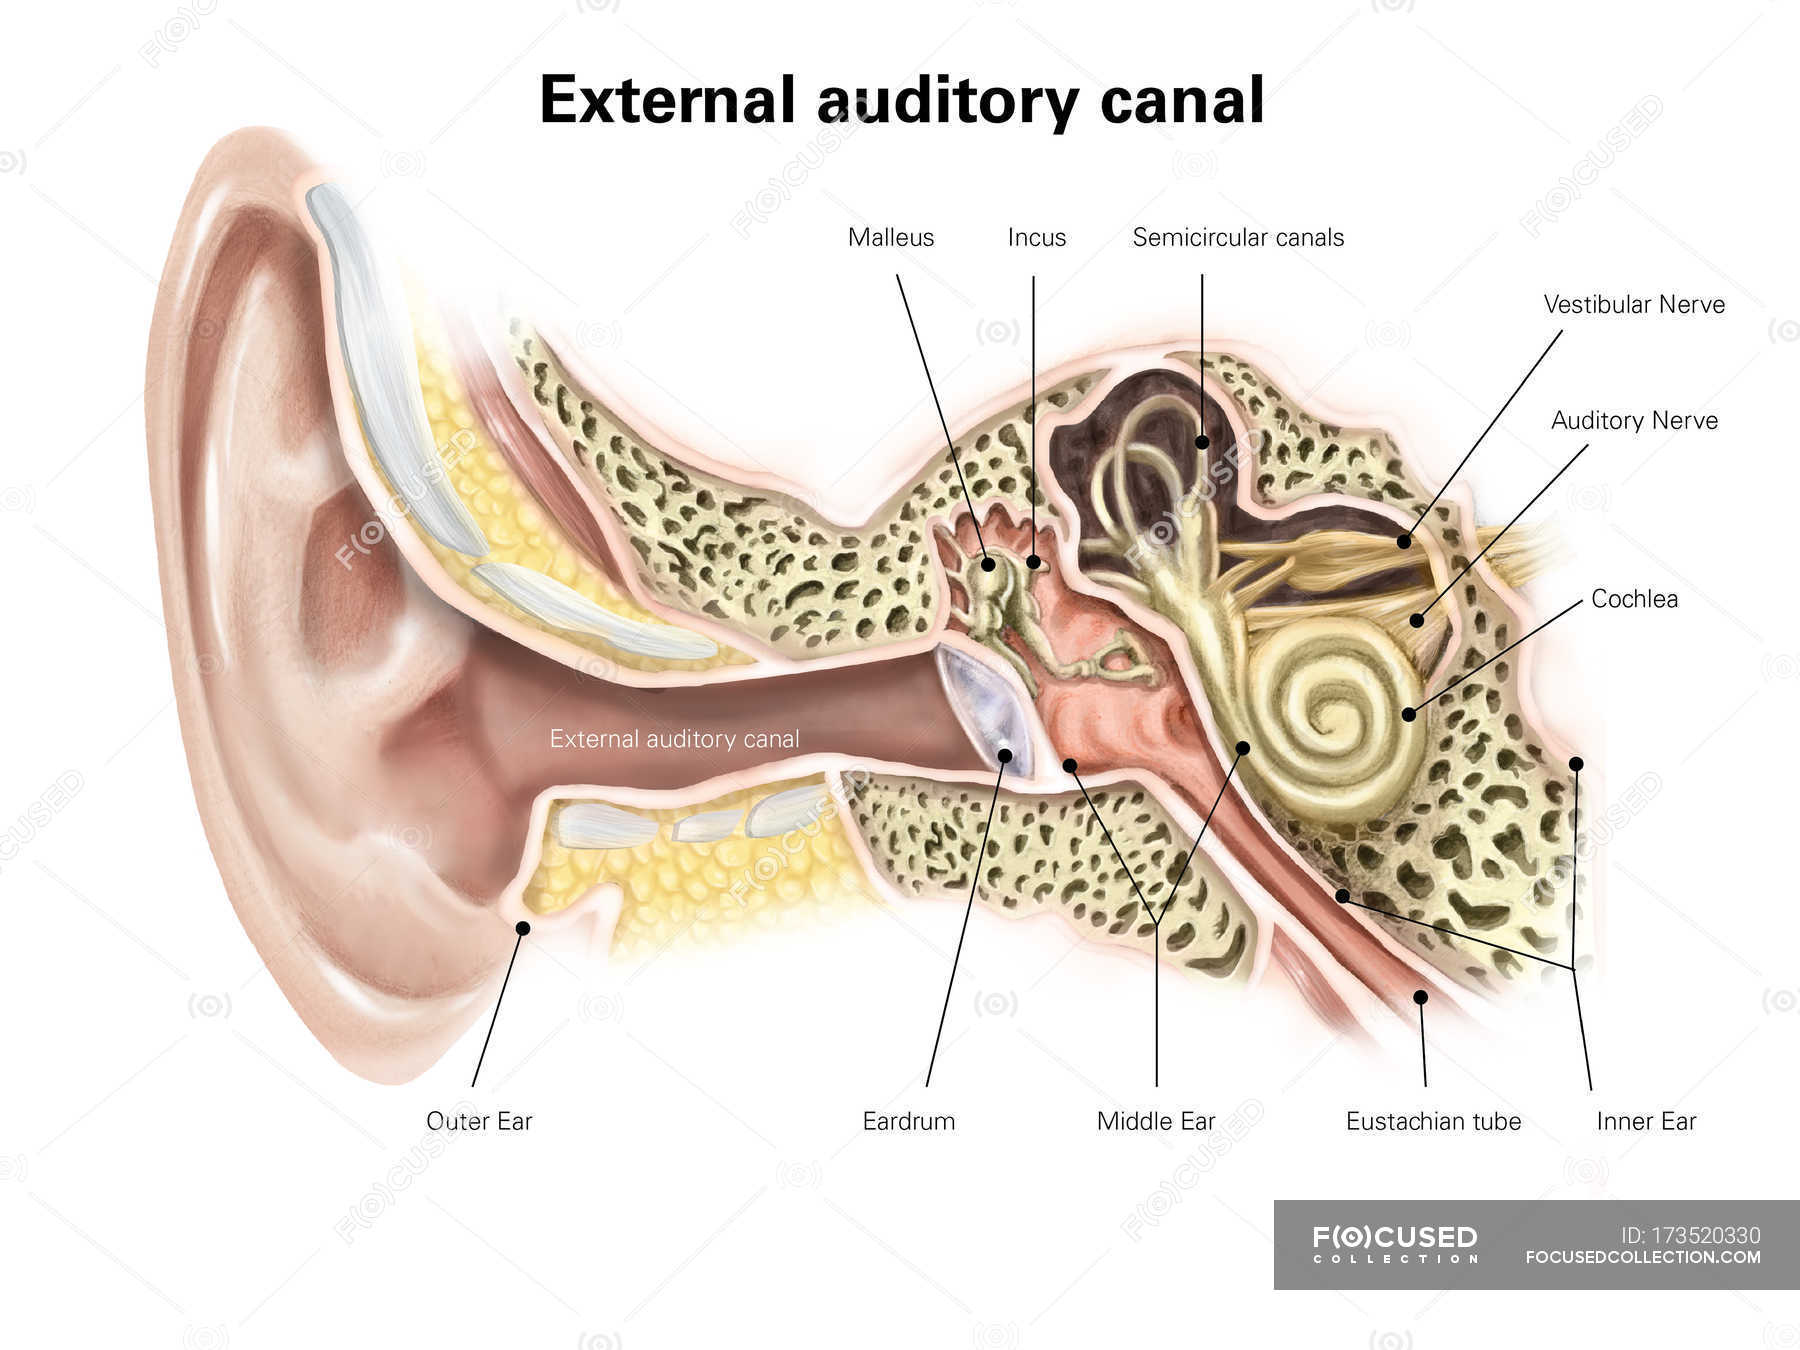 Auditory canal of human ear — vestibular, labels - Stock Photo | #173520330